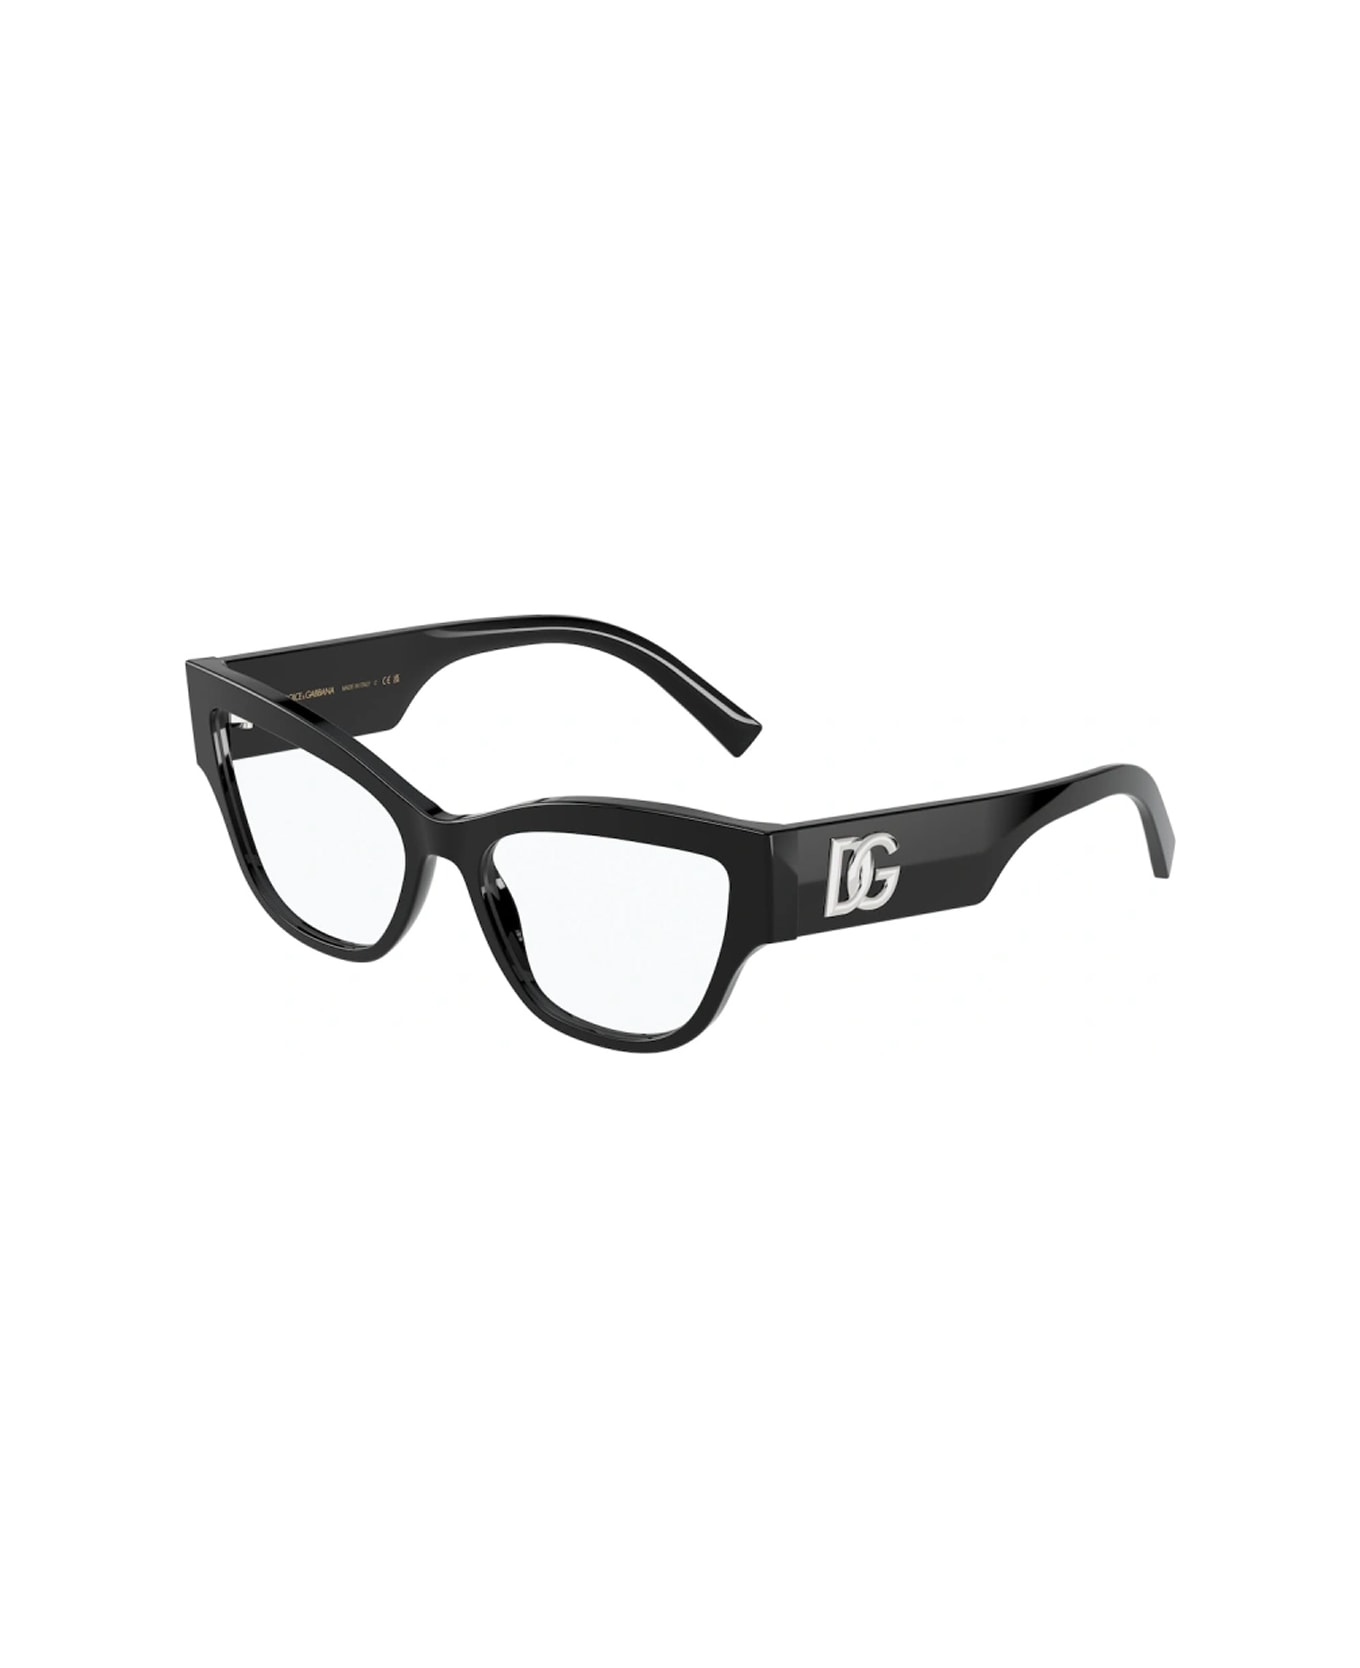 Dolce & Gabbana Eyewear Dg3378 501 Glasses - Nero アイウェア